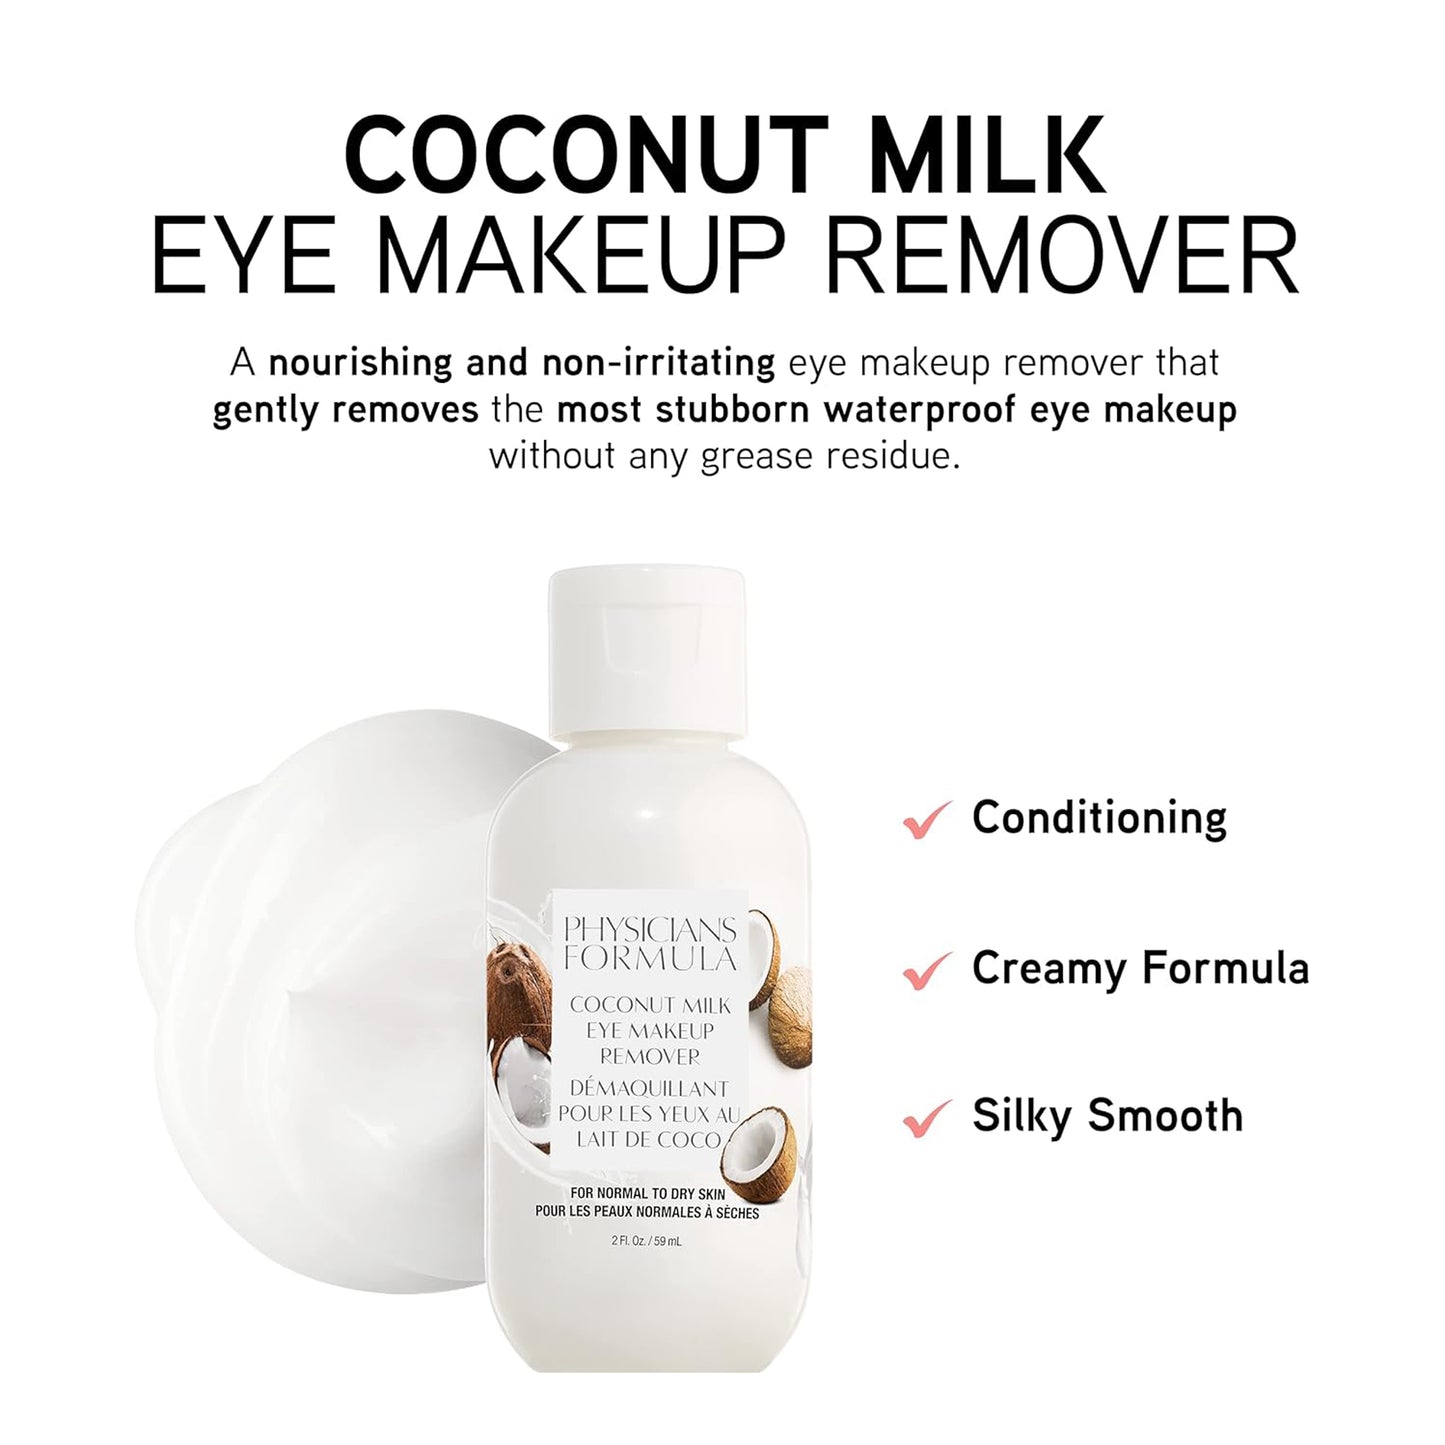 Physicians Formula Coconut Milk Eye Makeup Remover